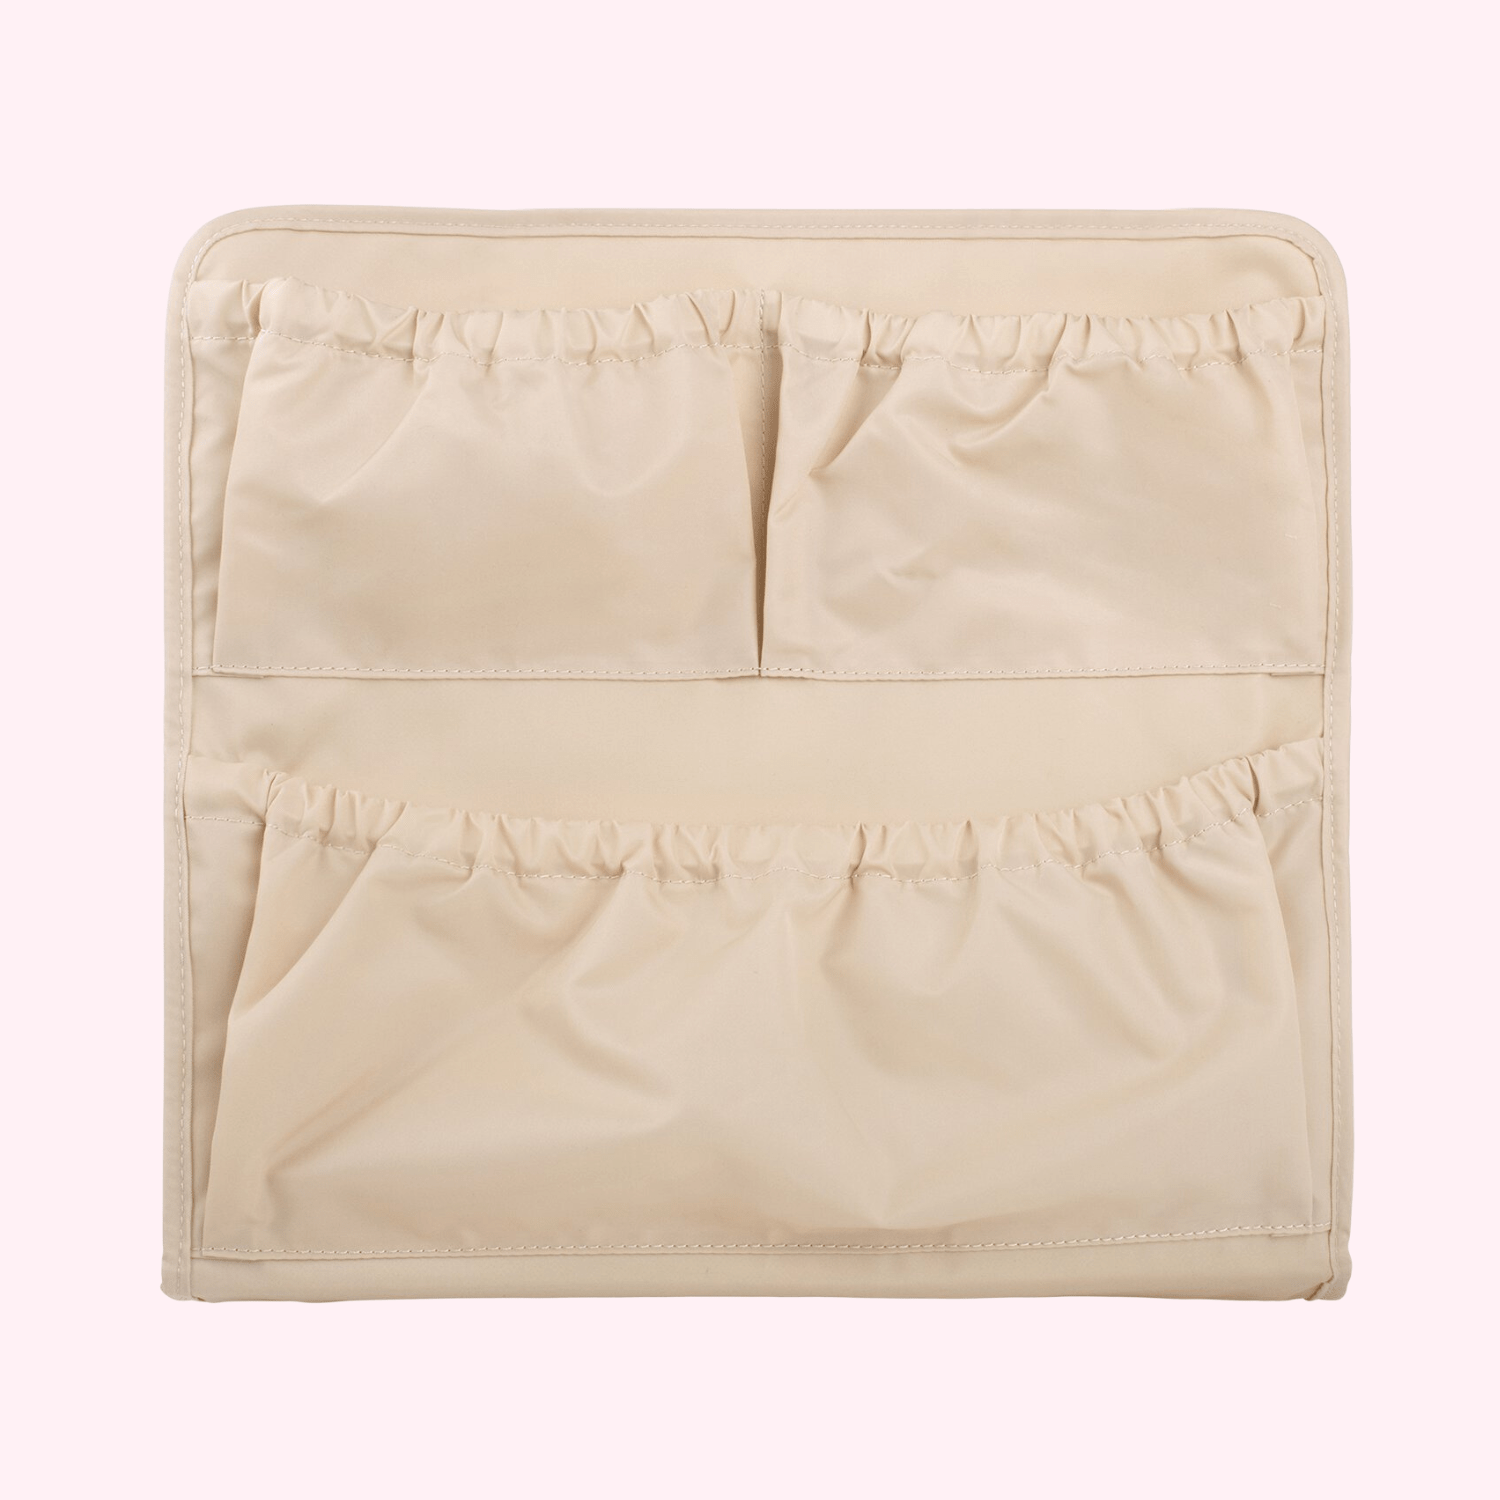 Damero Diaper Bag Insert Organizer (Sewn to The Bottom), Bag in